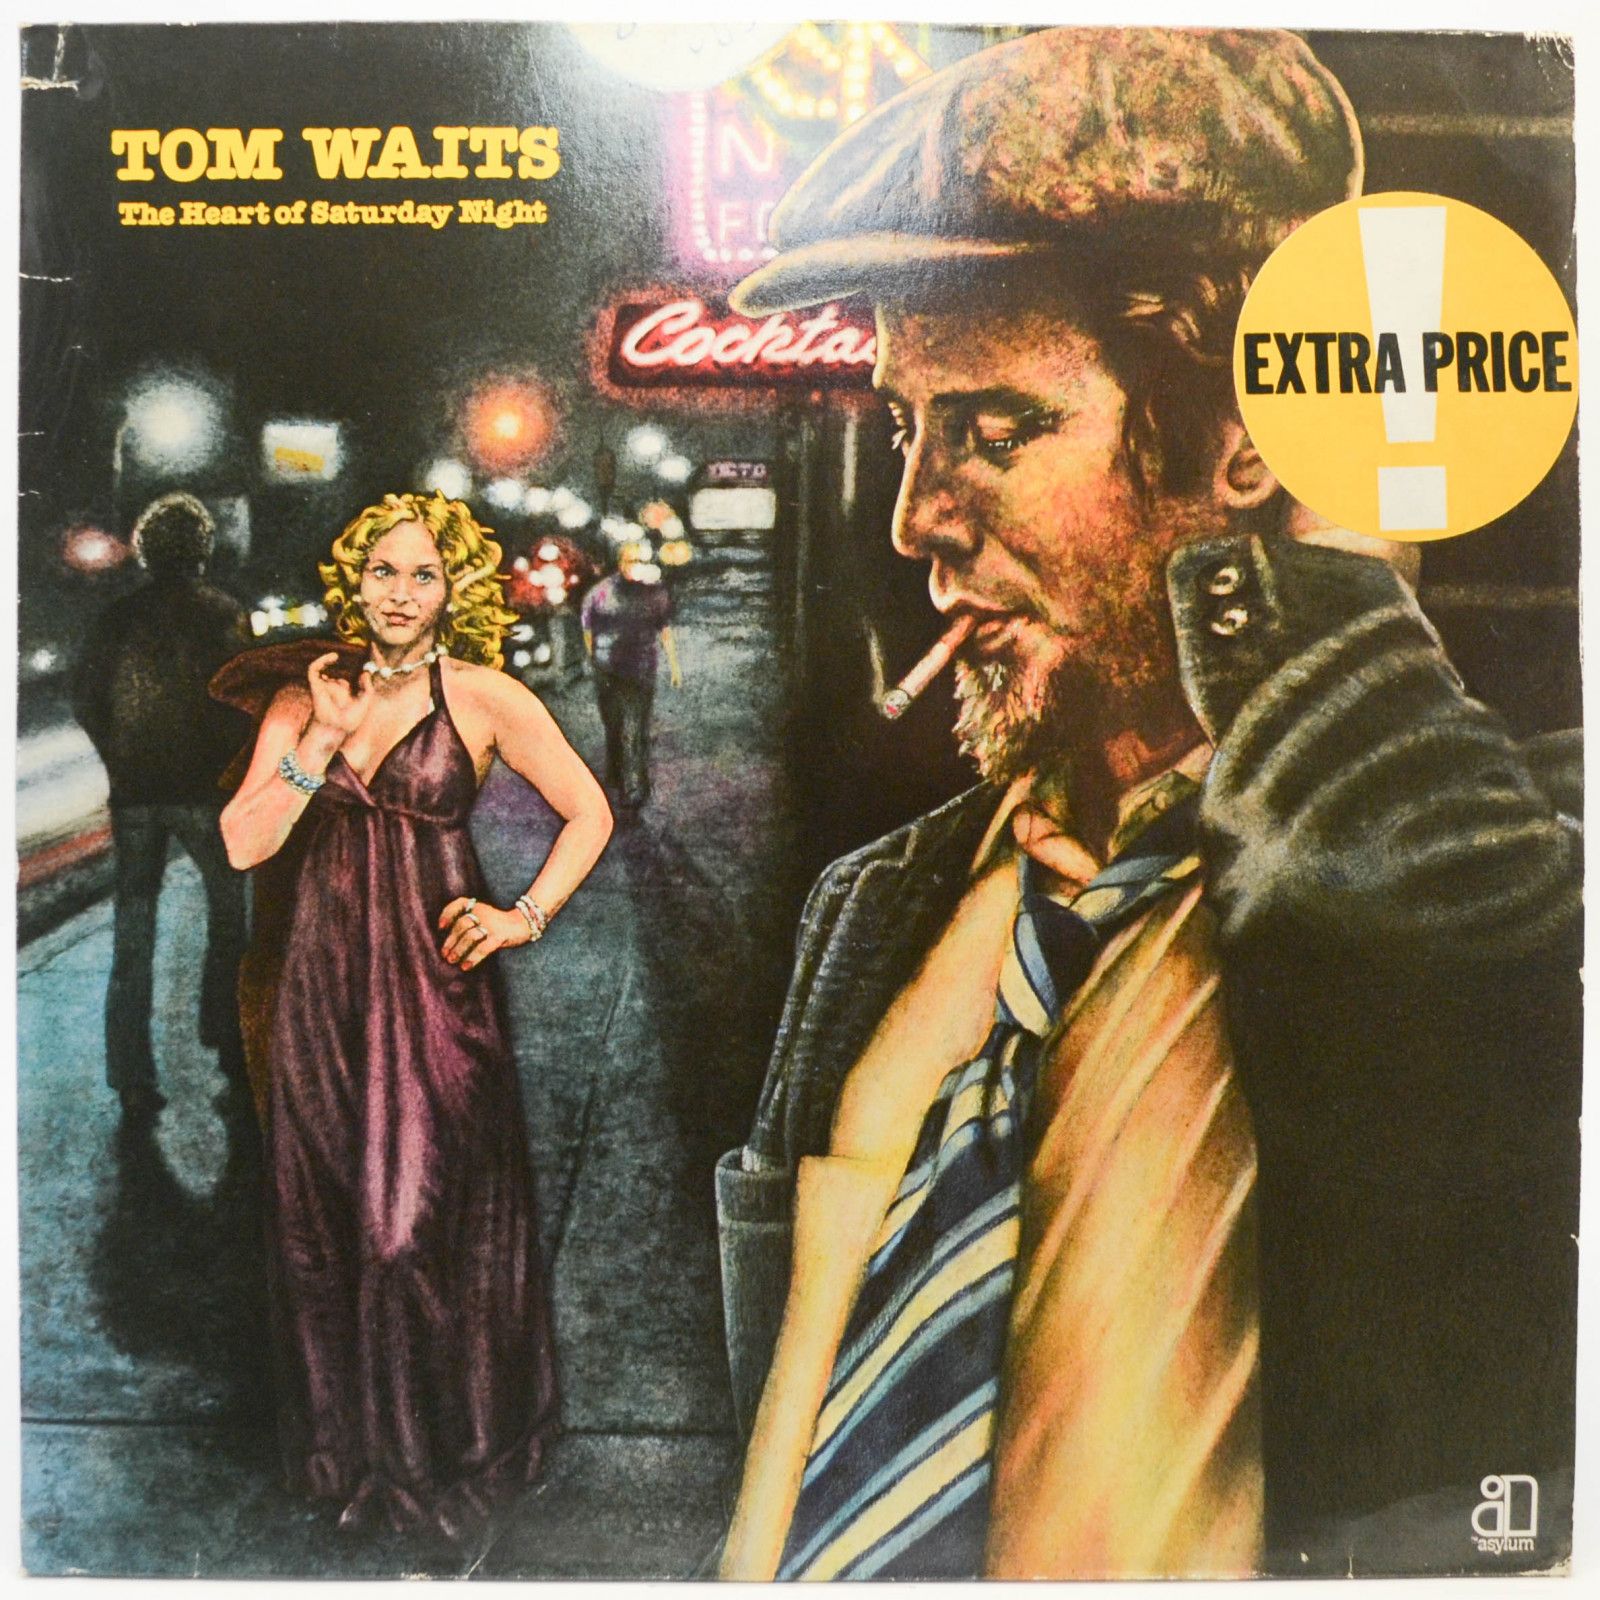 Tom Waits — The Heart Of Saturday Night, 1974